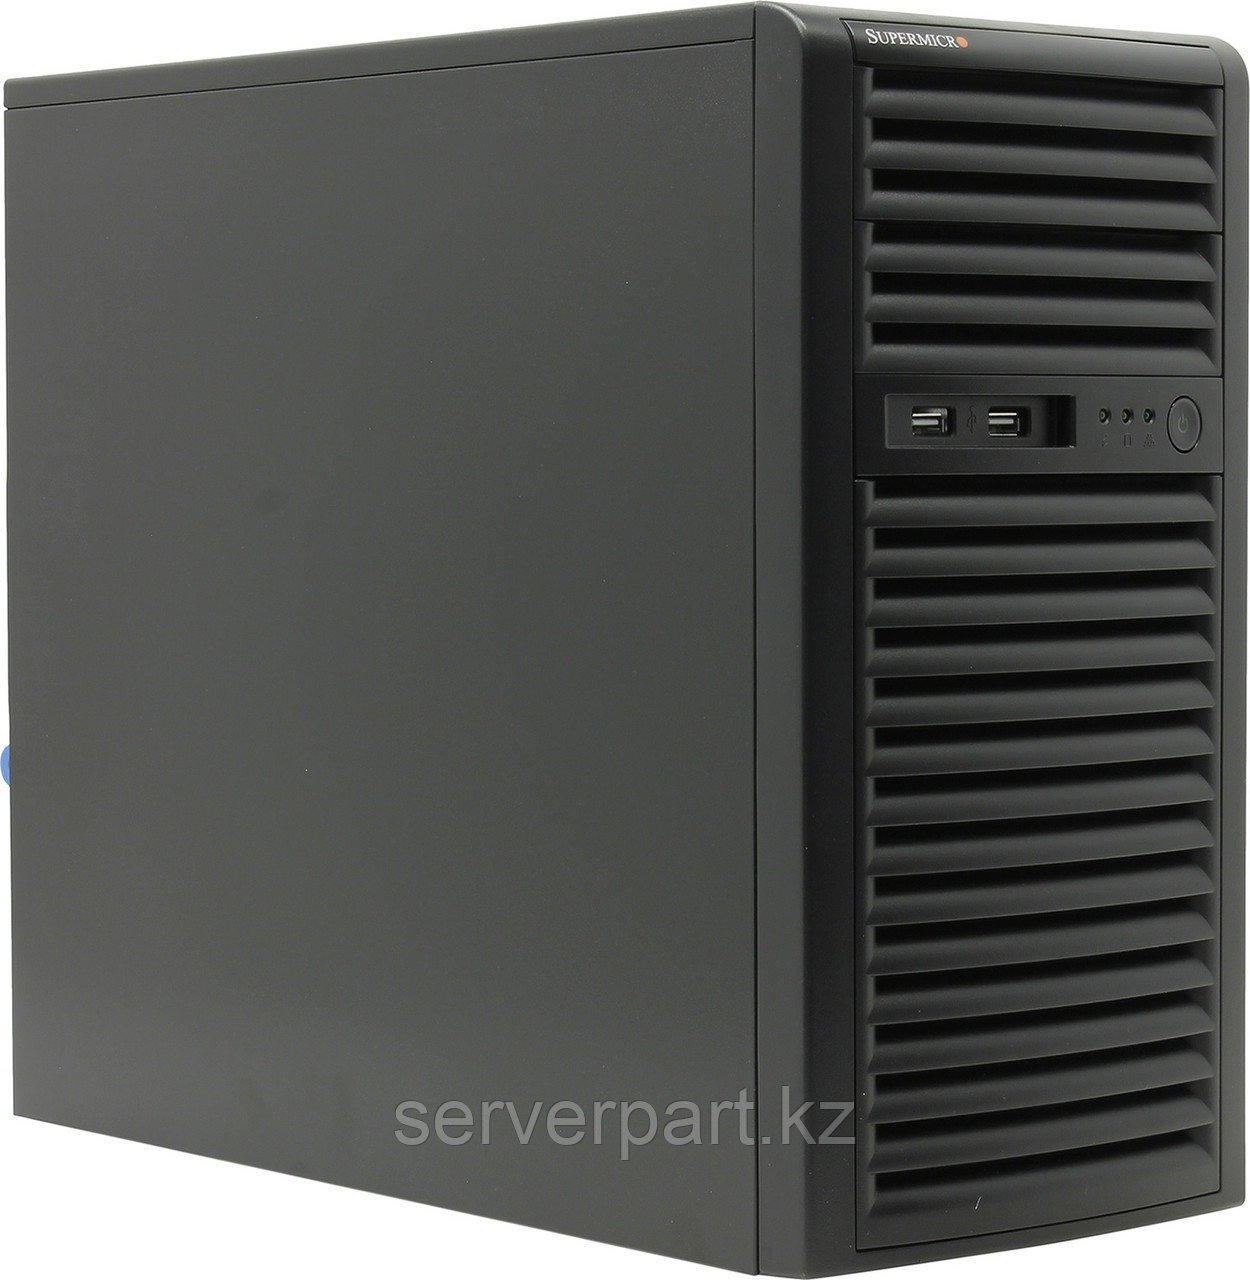 Сервер Supermicro SYS-5039D Tower/4-core intel xeon E3-1220v6 3GHz/no RAM/no HDD up-to 4 nhp/RAID